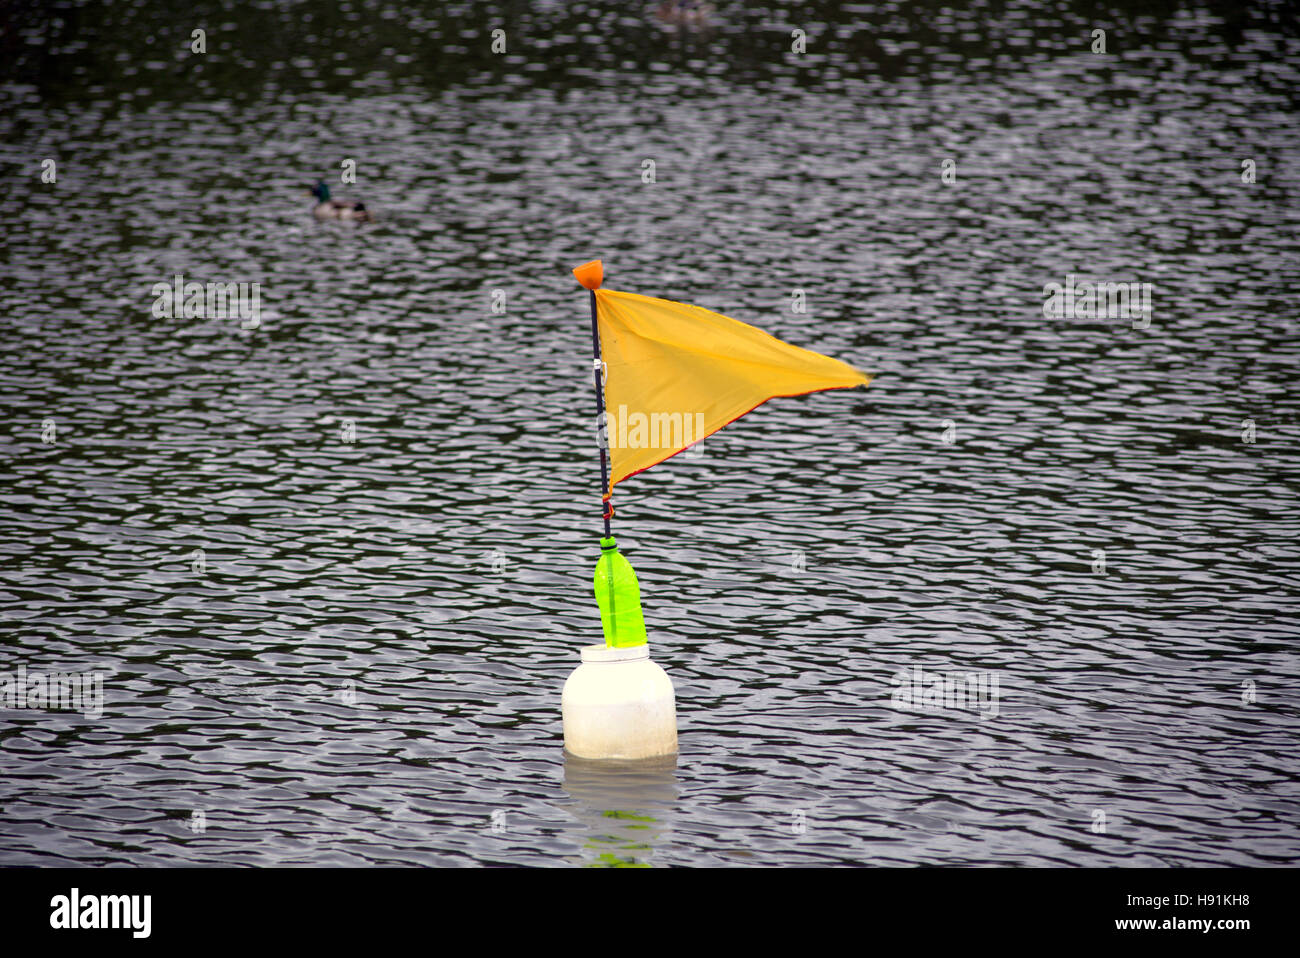 marker buoy for model boat race on pond Stock Photo